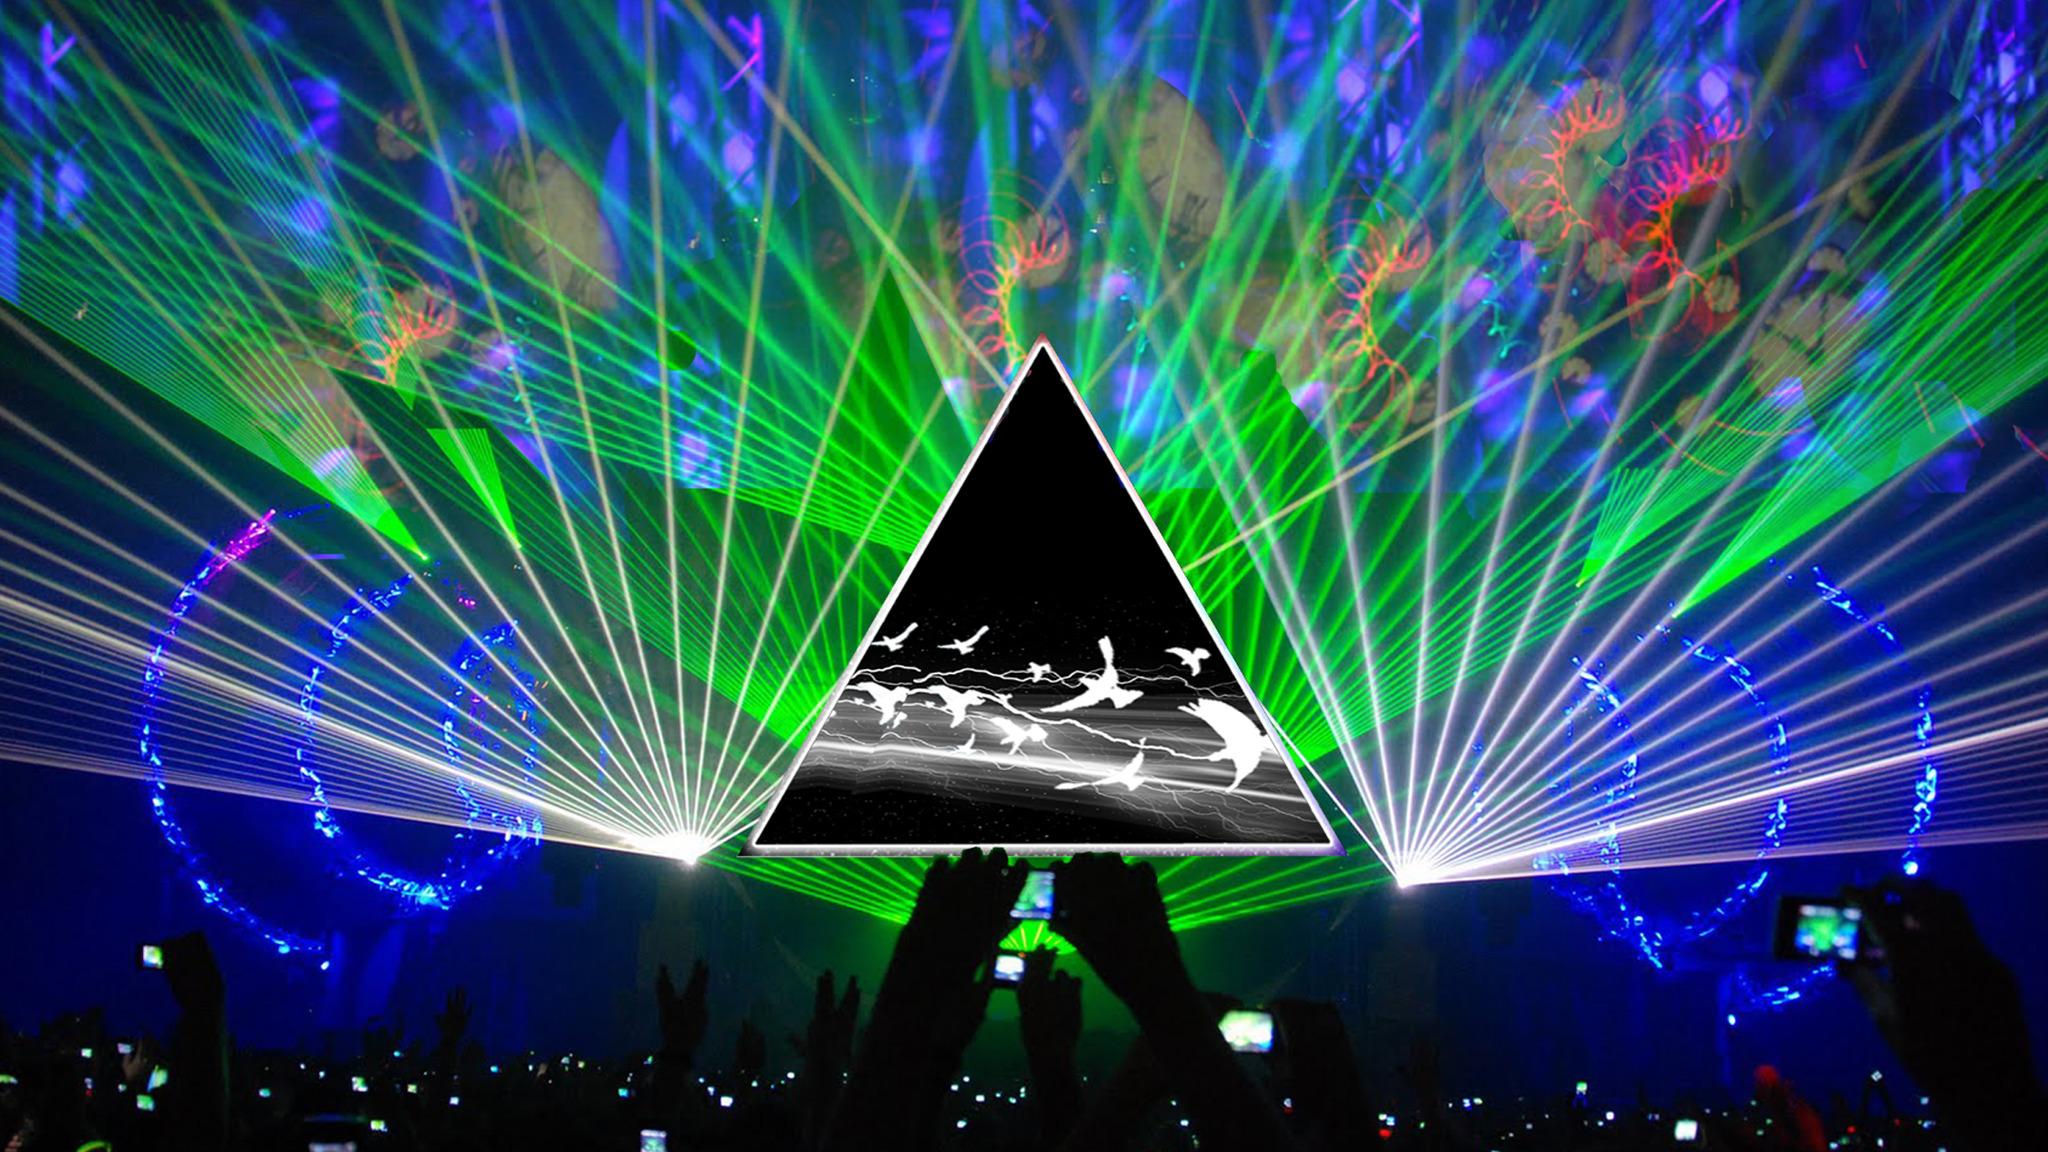 Pink Floyd Laser Spectacular at HOYT SHERMAN PLACE - Des Moines, IA 50309